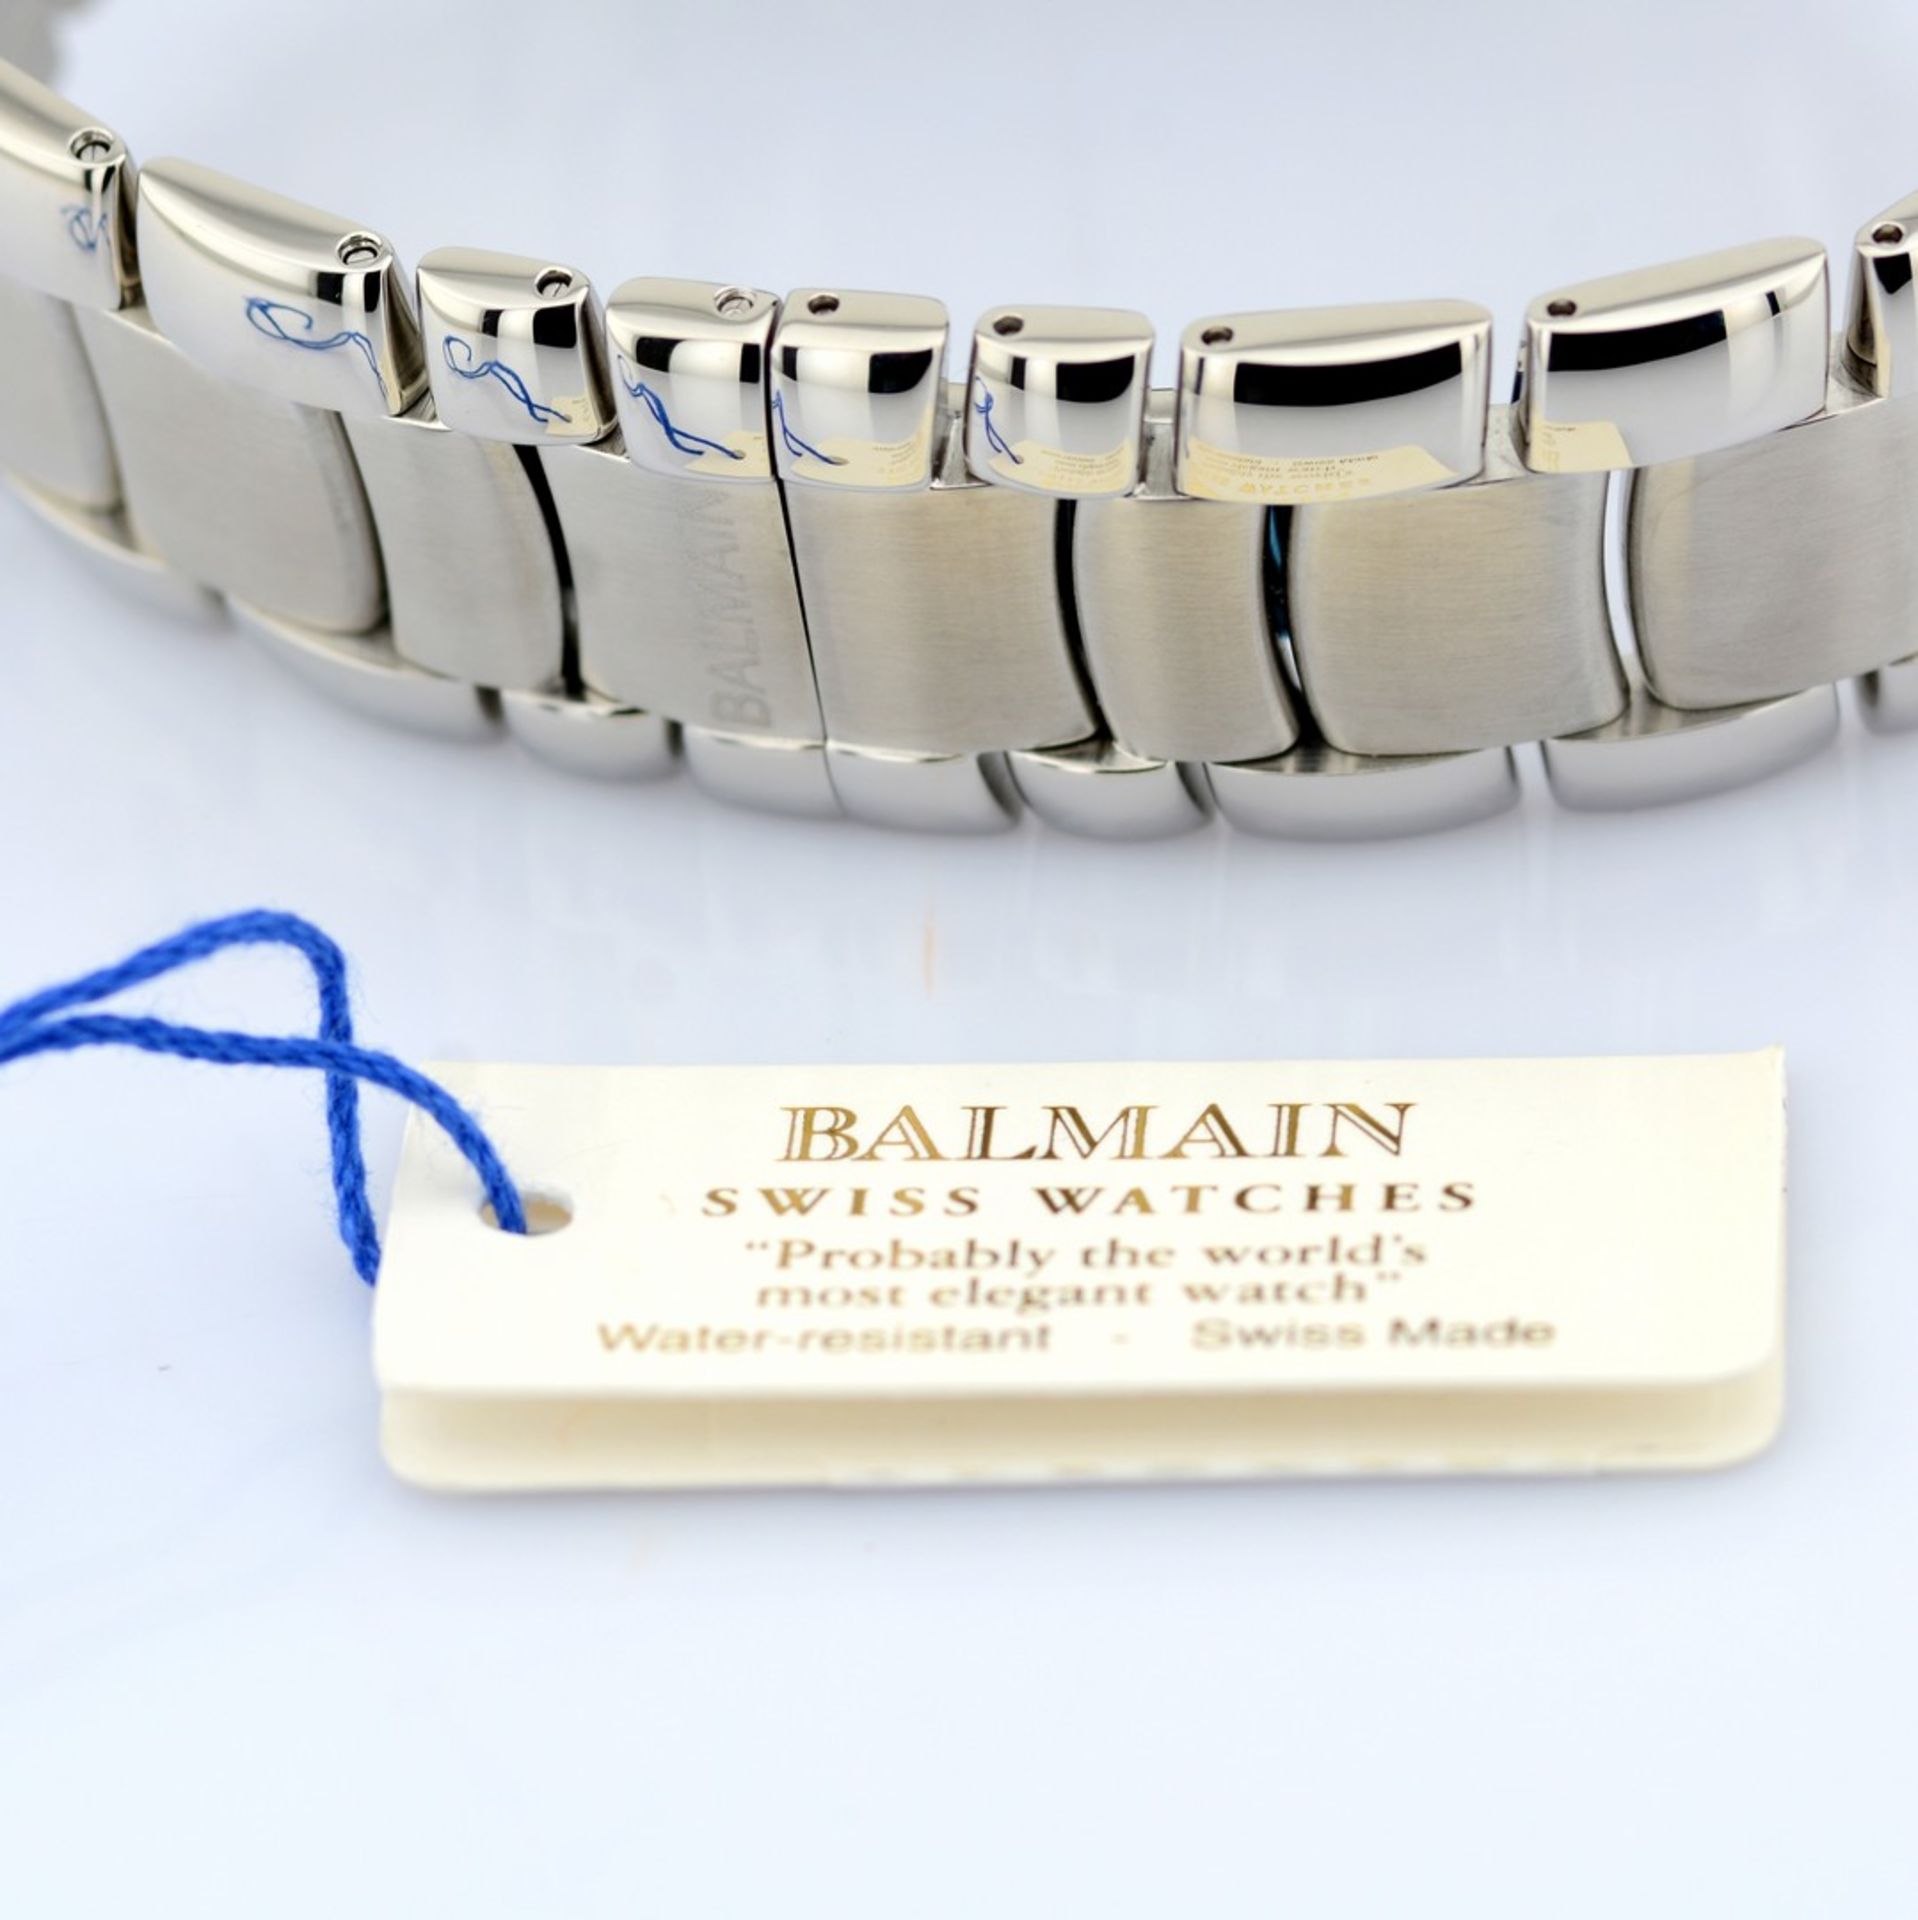 Pierre Balmain / Swiss Chronograph Date - Gentlemen's Steel Wristwatch - Image 6 of 7